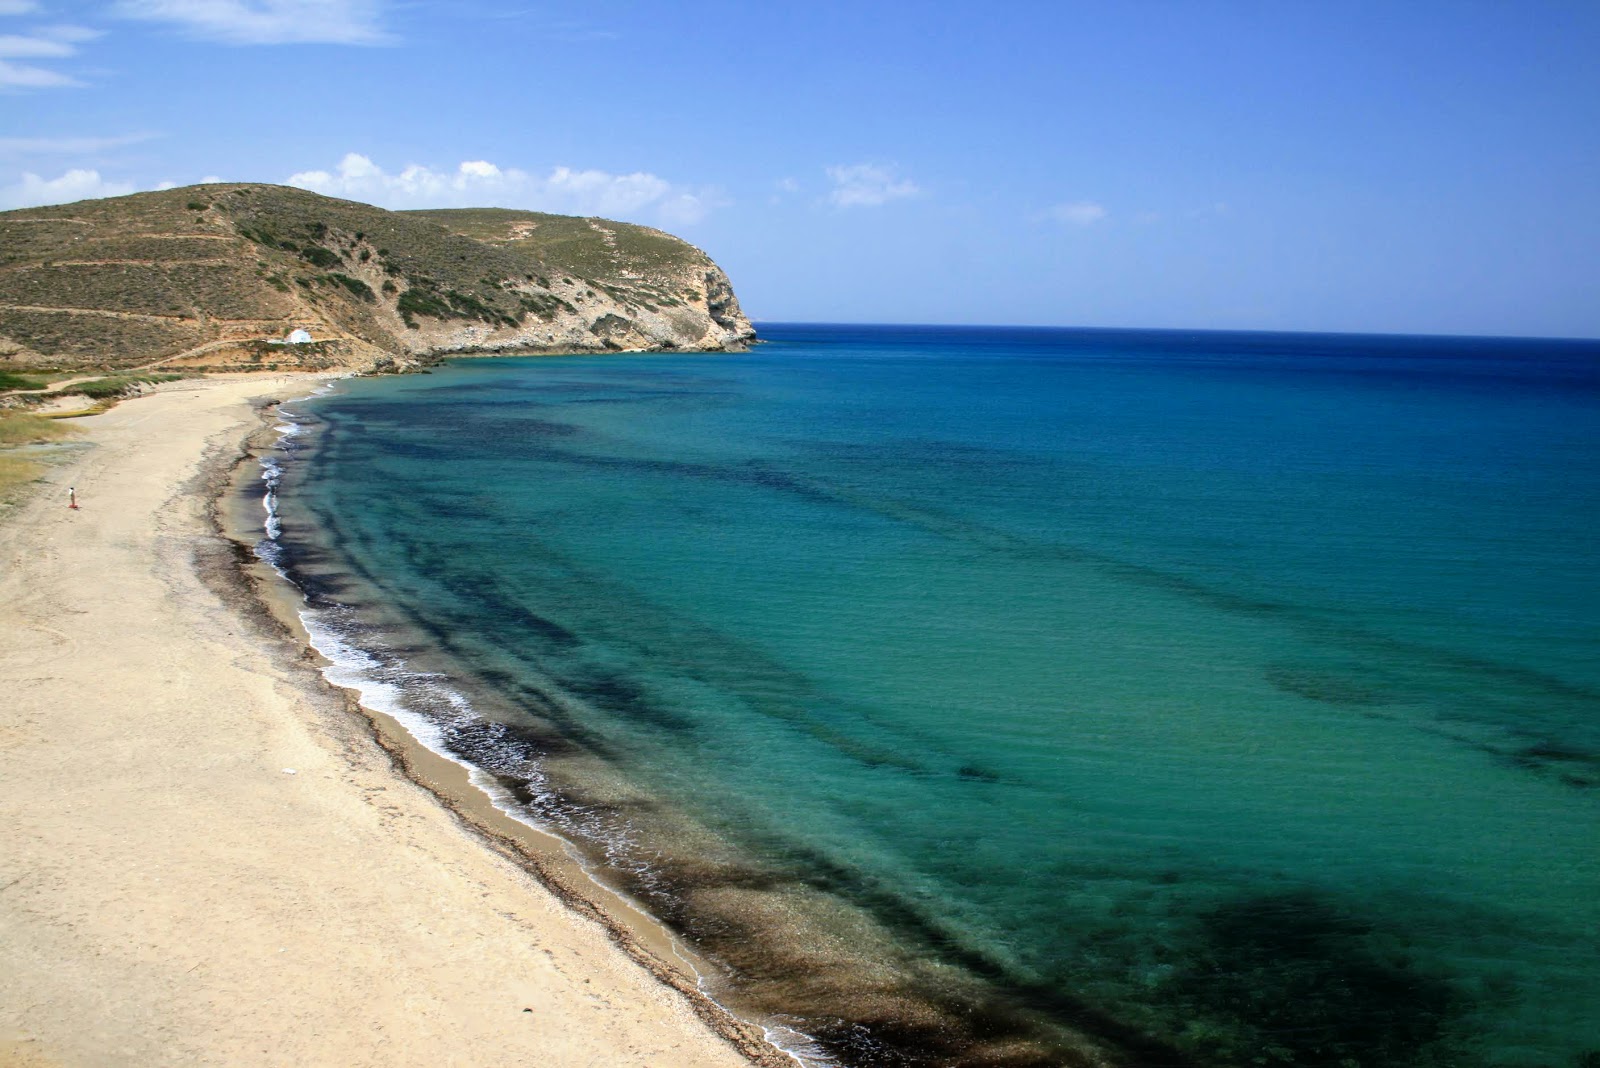 Fotografija Amitis beach z prostoren zaliv